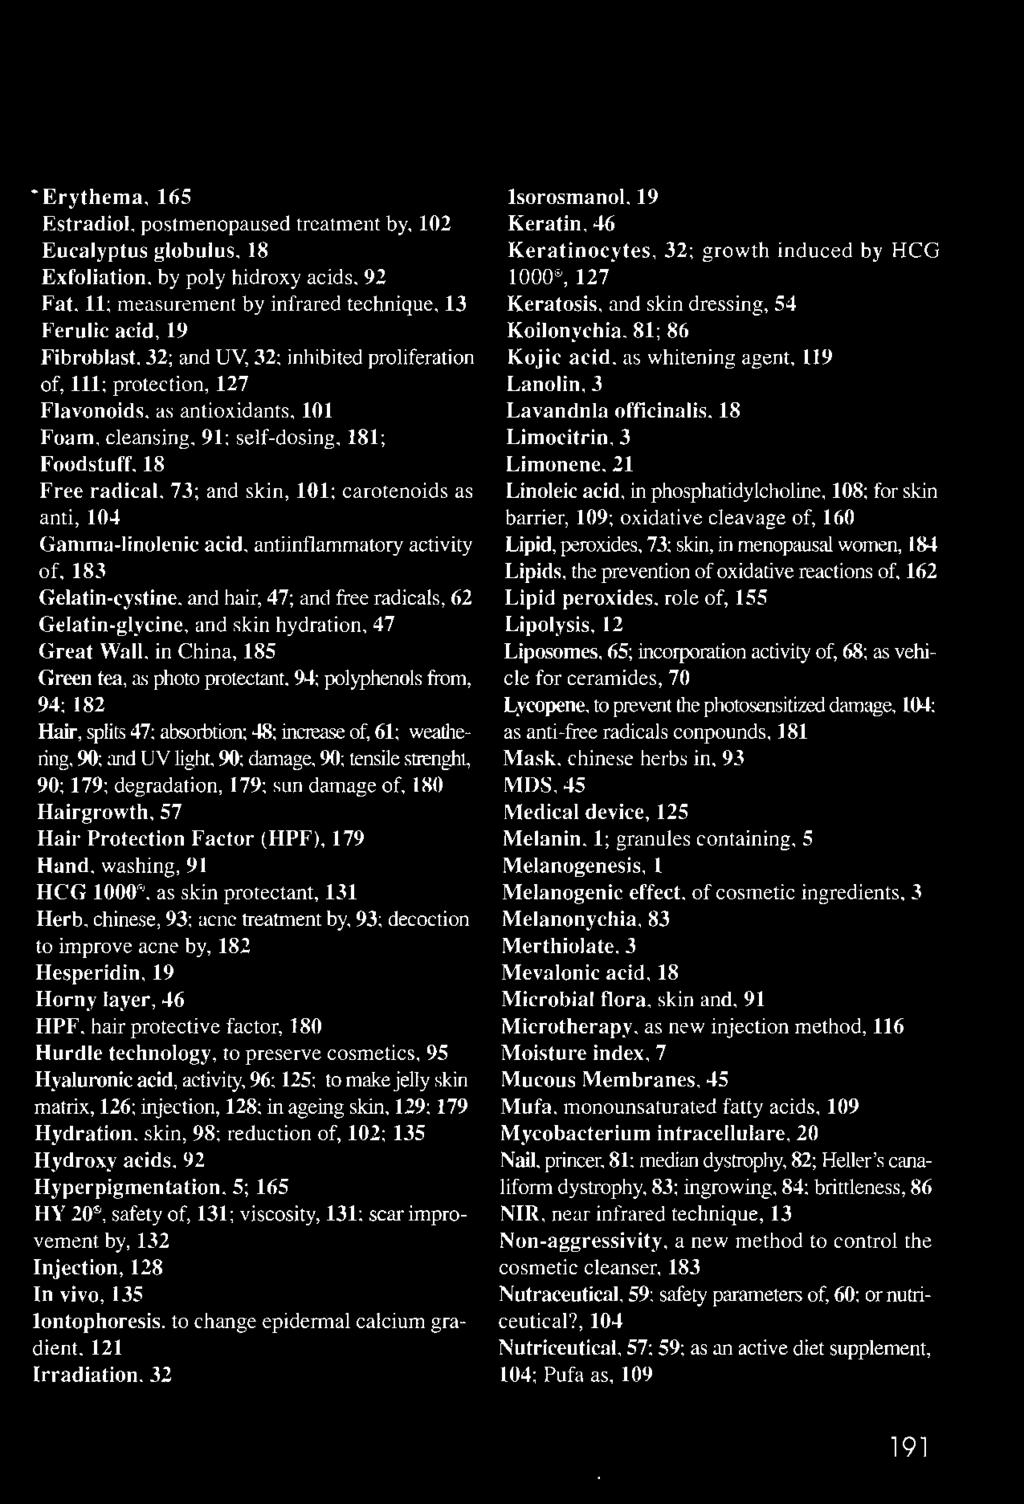 carotenoids as anti, 104 Gamma-linolenic acid, antiinflammatory activity of, 183 Gelatin-cystine, and hair, 47; and free radicals, 62 Gelatin-glycine, and skin hydration, 47 Great Wall, in China, 185